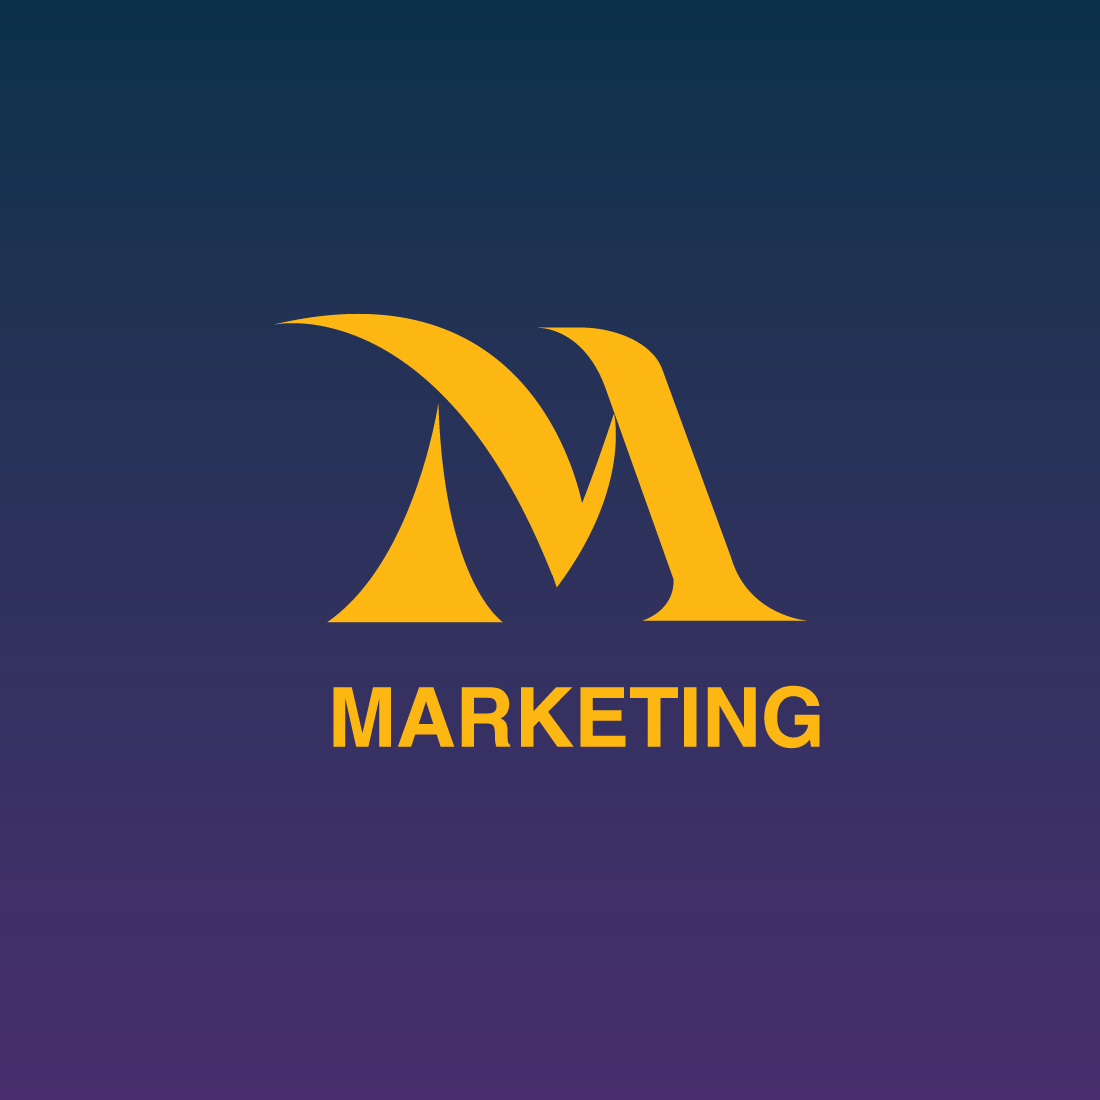 M Lettermark Logo preview image.